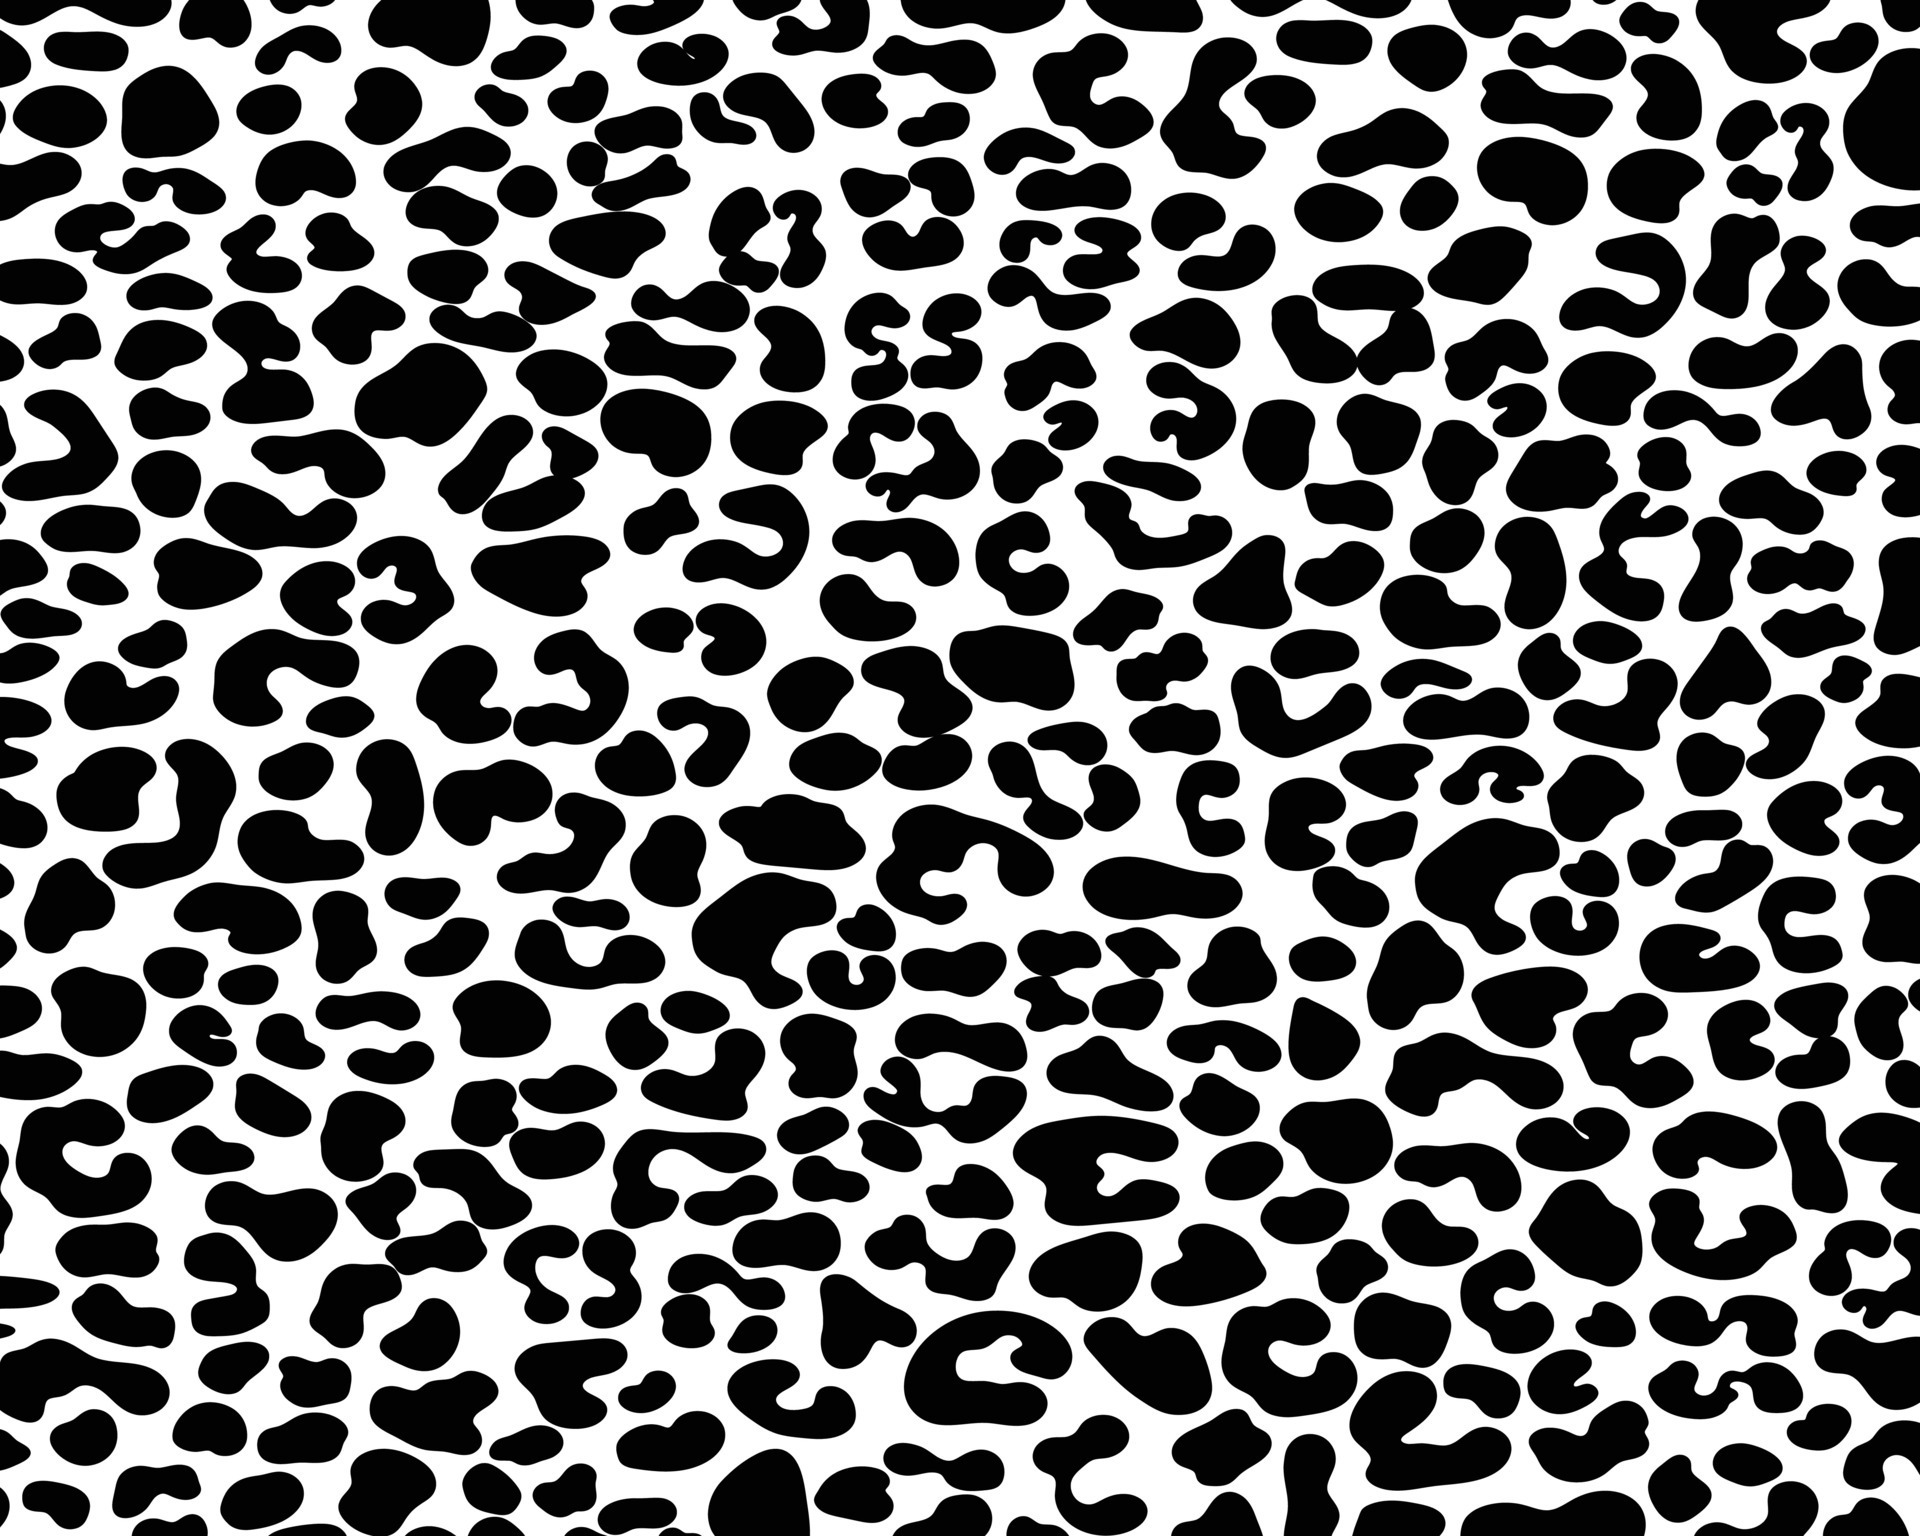 Leopard print seamless background pattern black Vector Image